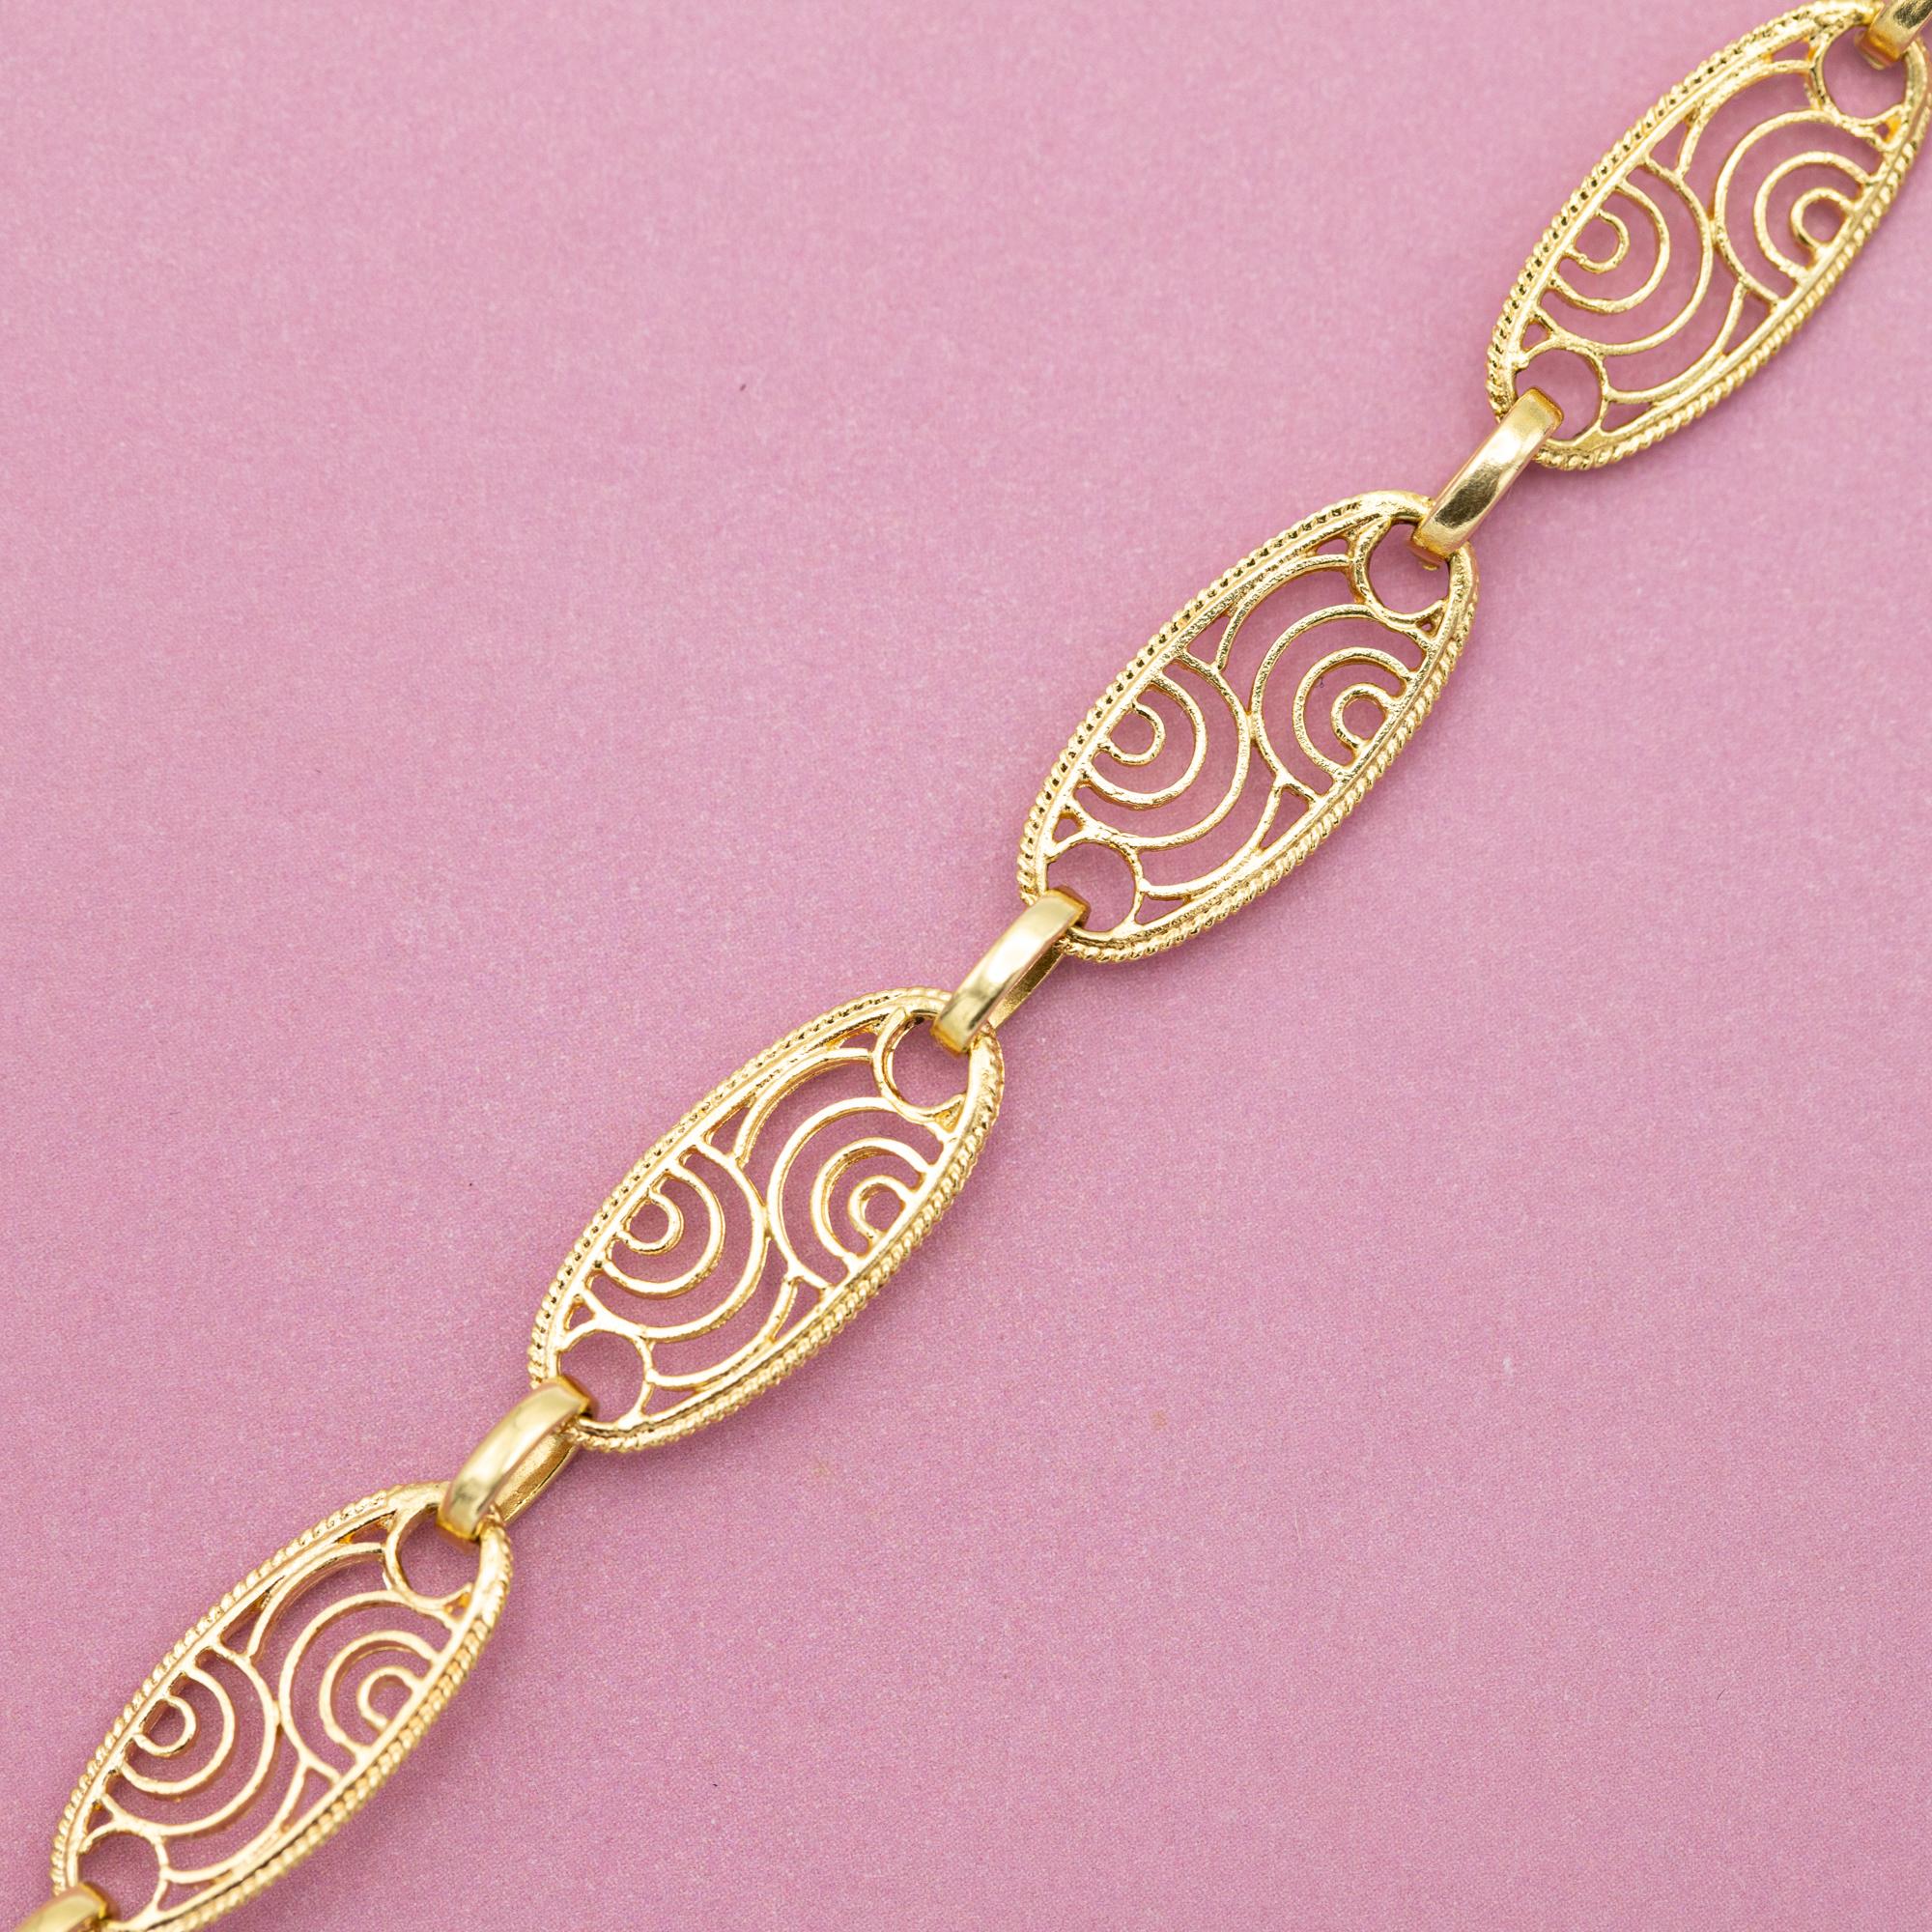 18k Vintage filigree bracelet - Solid Gold tennis bracelet - short sautoir In Good Condition For Sale In Antwerp, BE